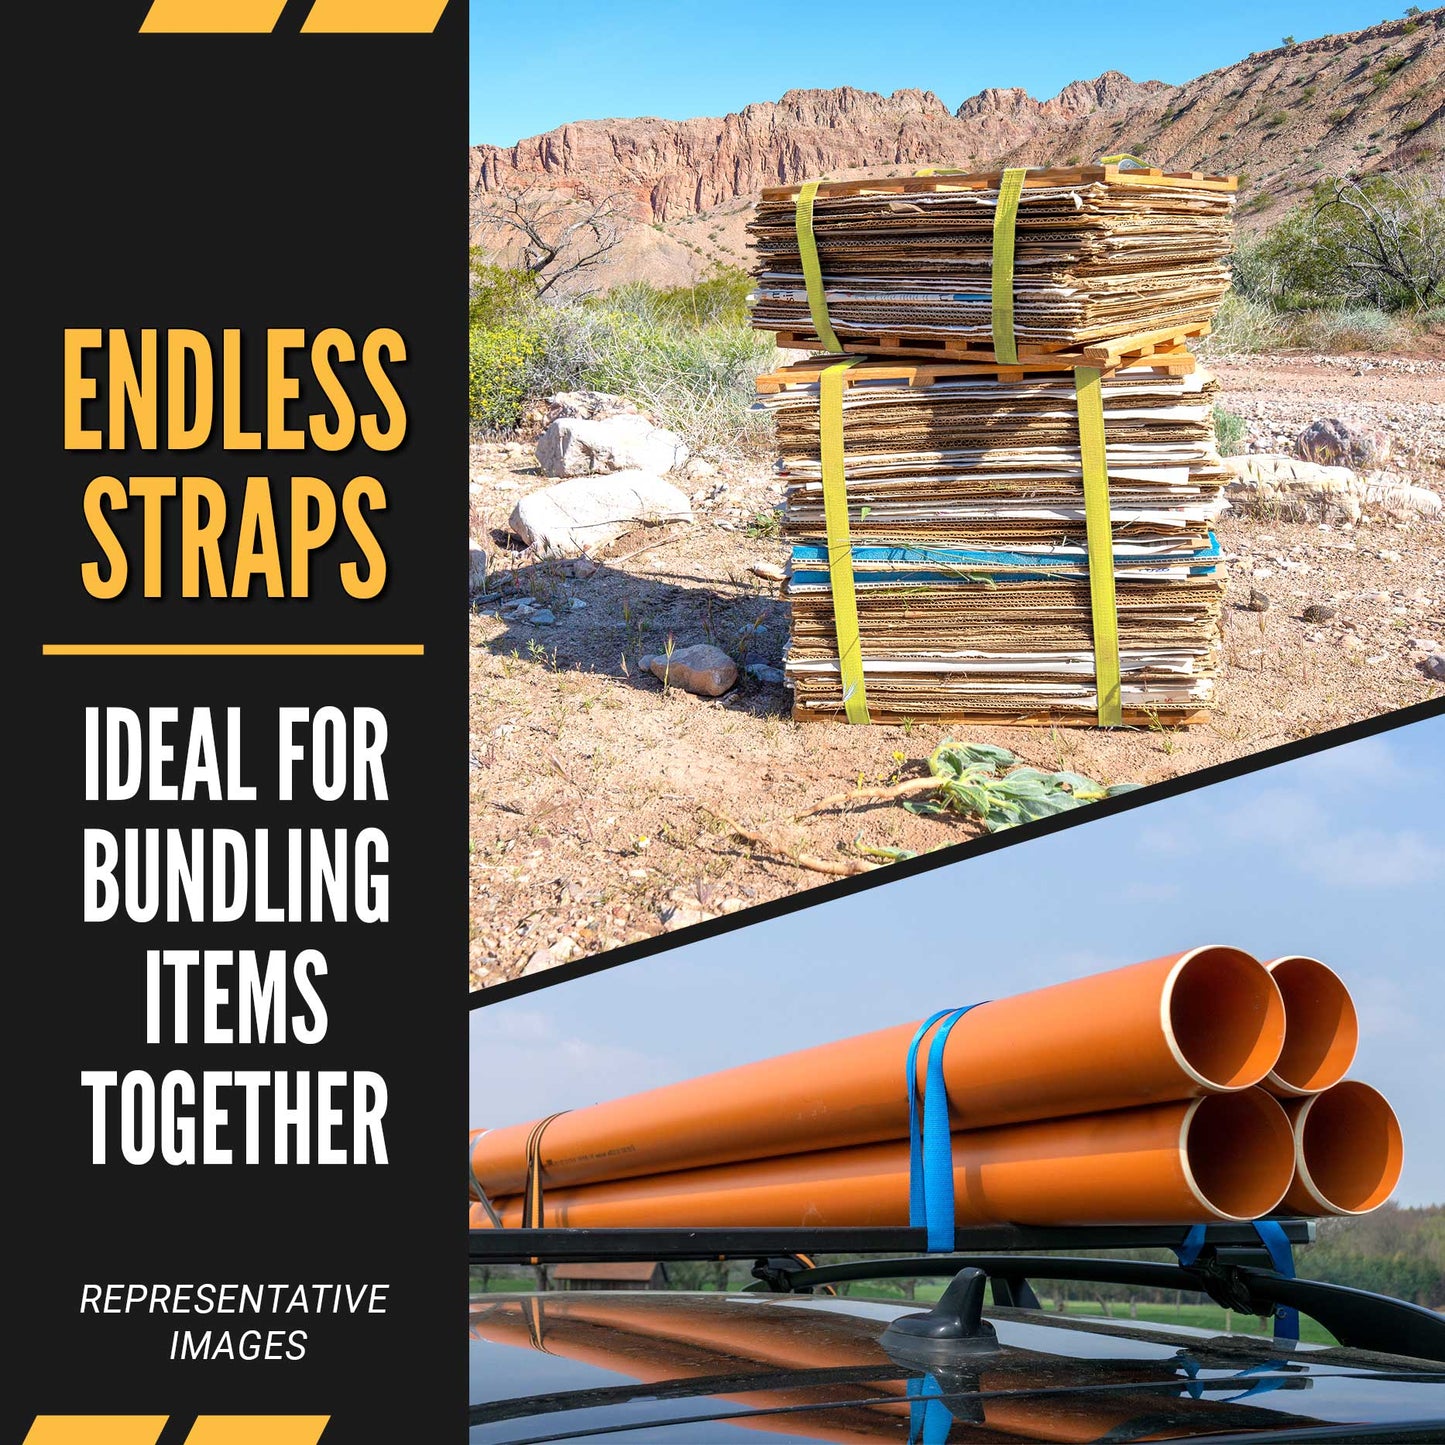 10' endless ratchet strap -  endless straps are ideal for bundling items together